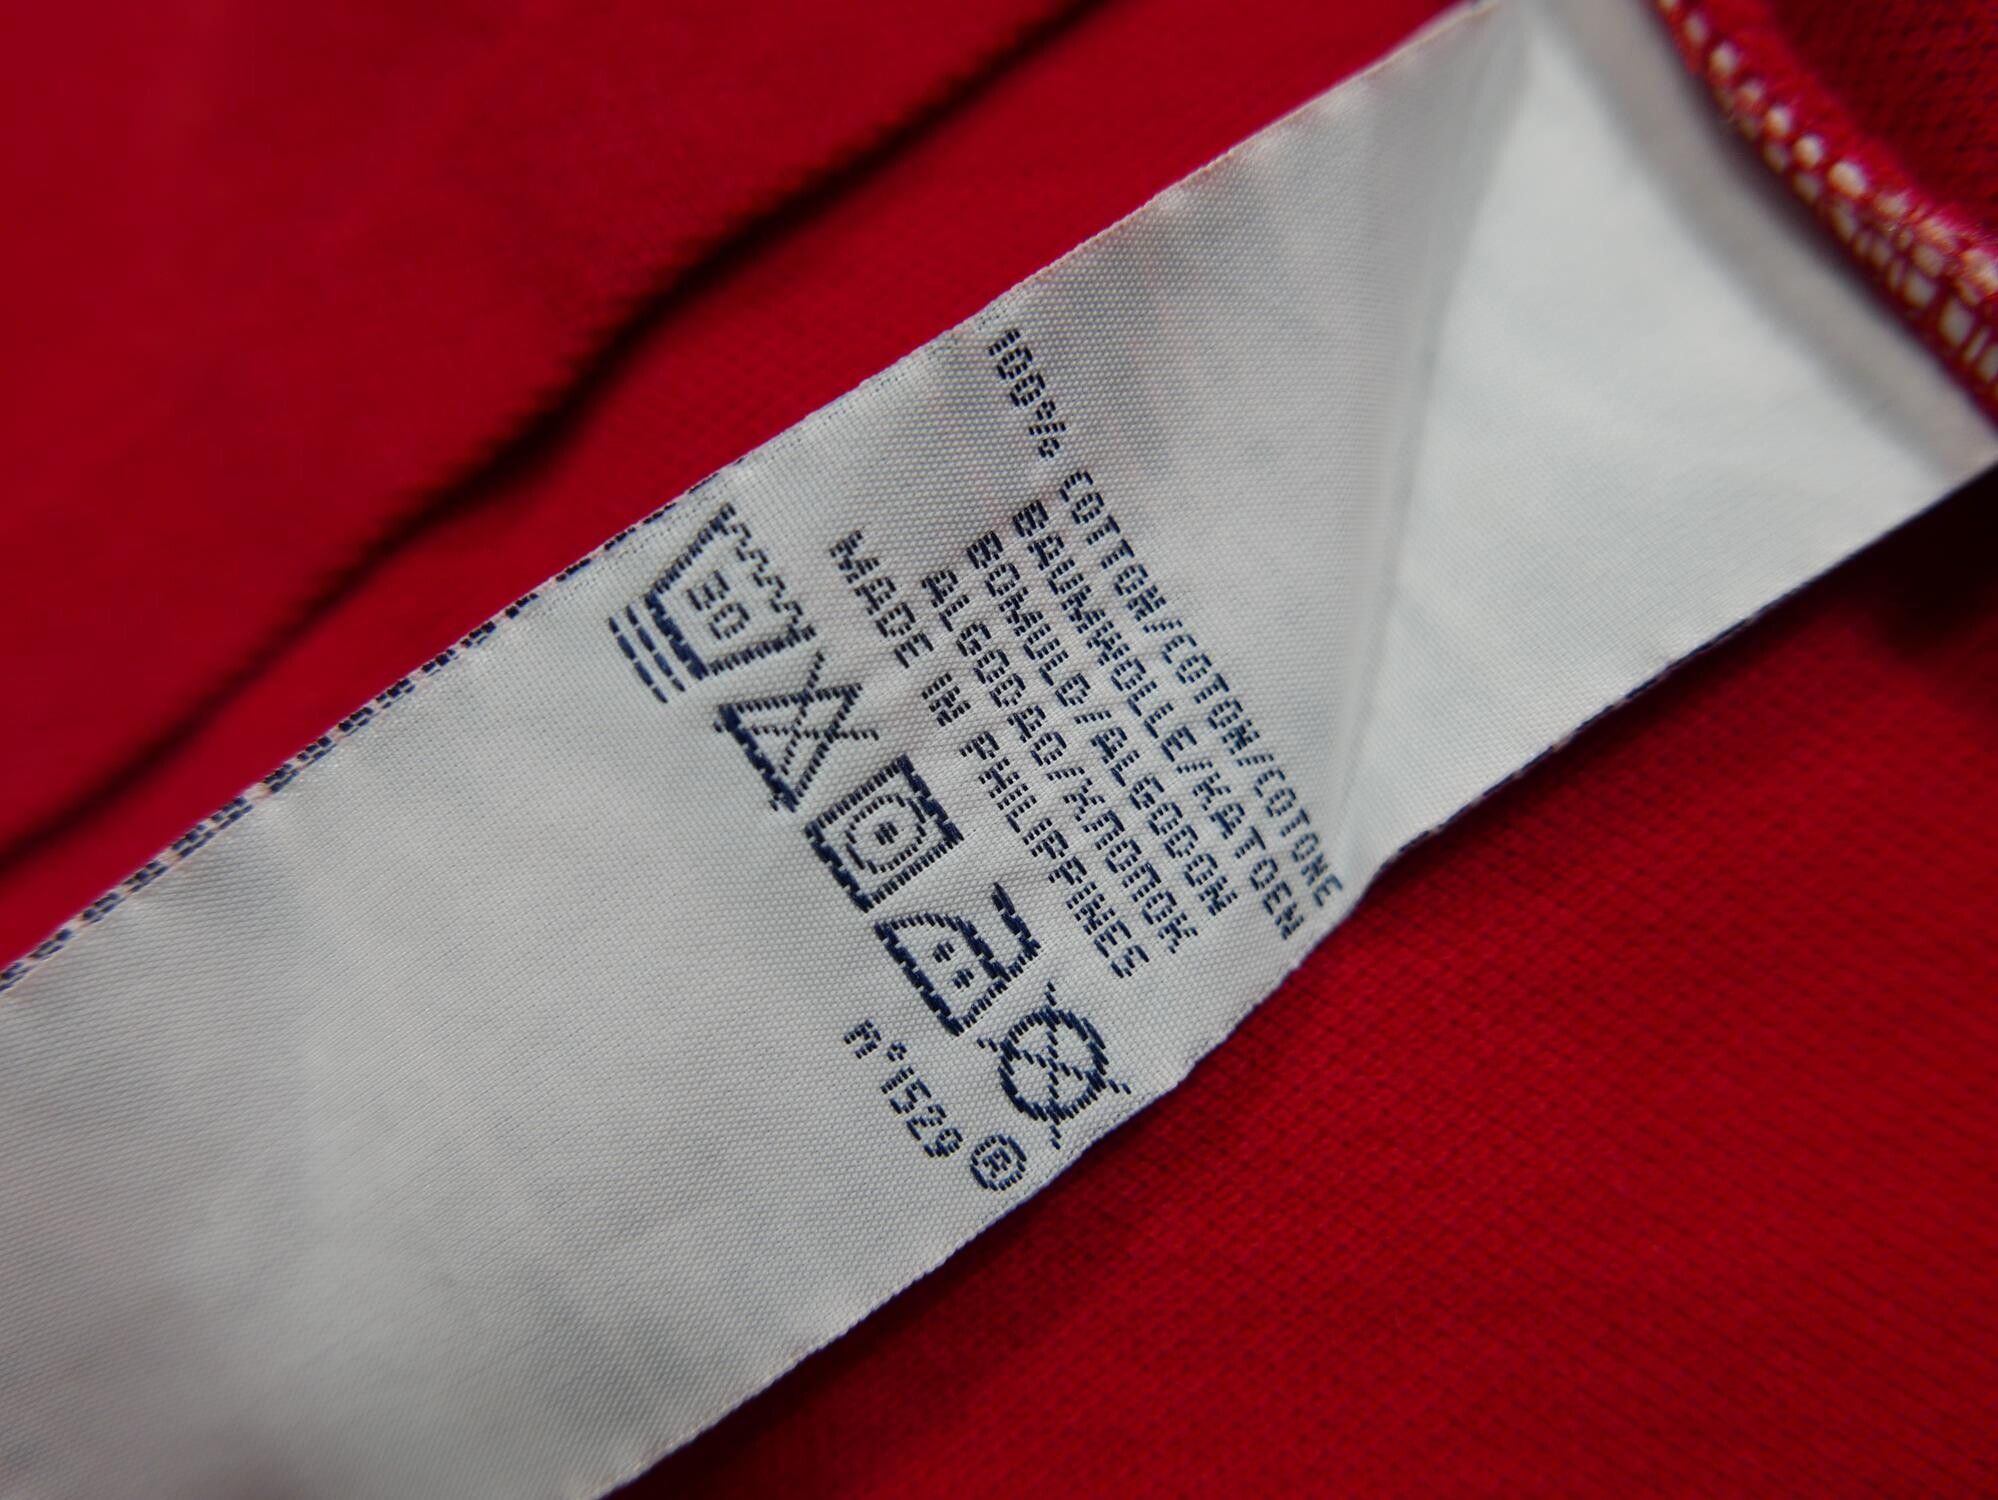 Polo Ralph Lauren Polo Ralph Lauren Shirt Red Military Graphic Naval Air M Size US M / EU 48-50 / 2 - 4 Preview